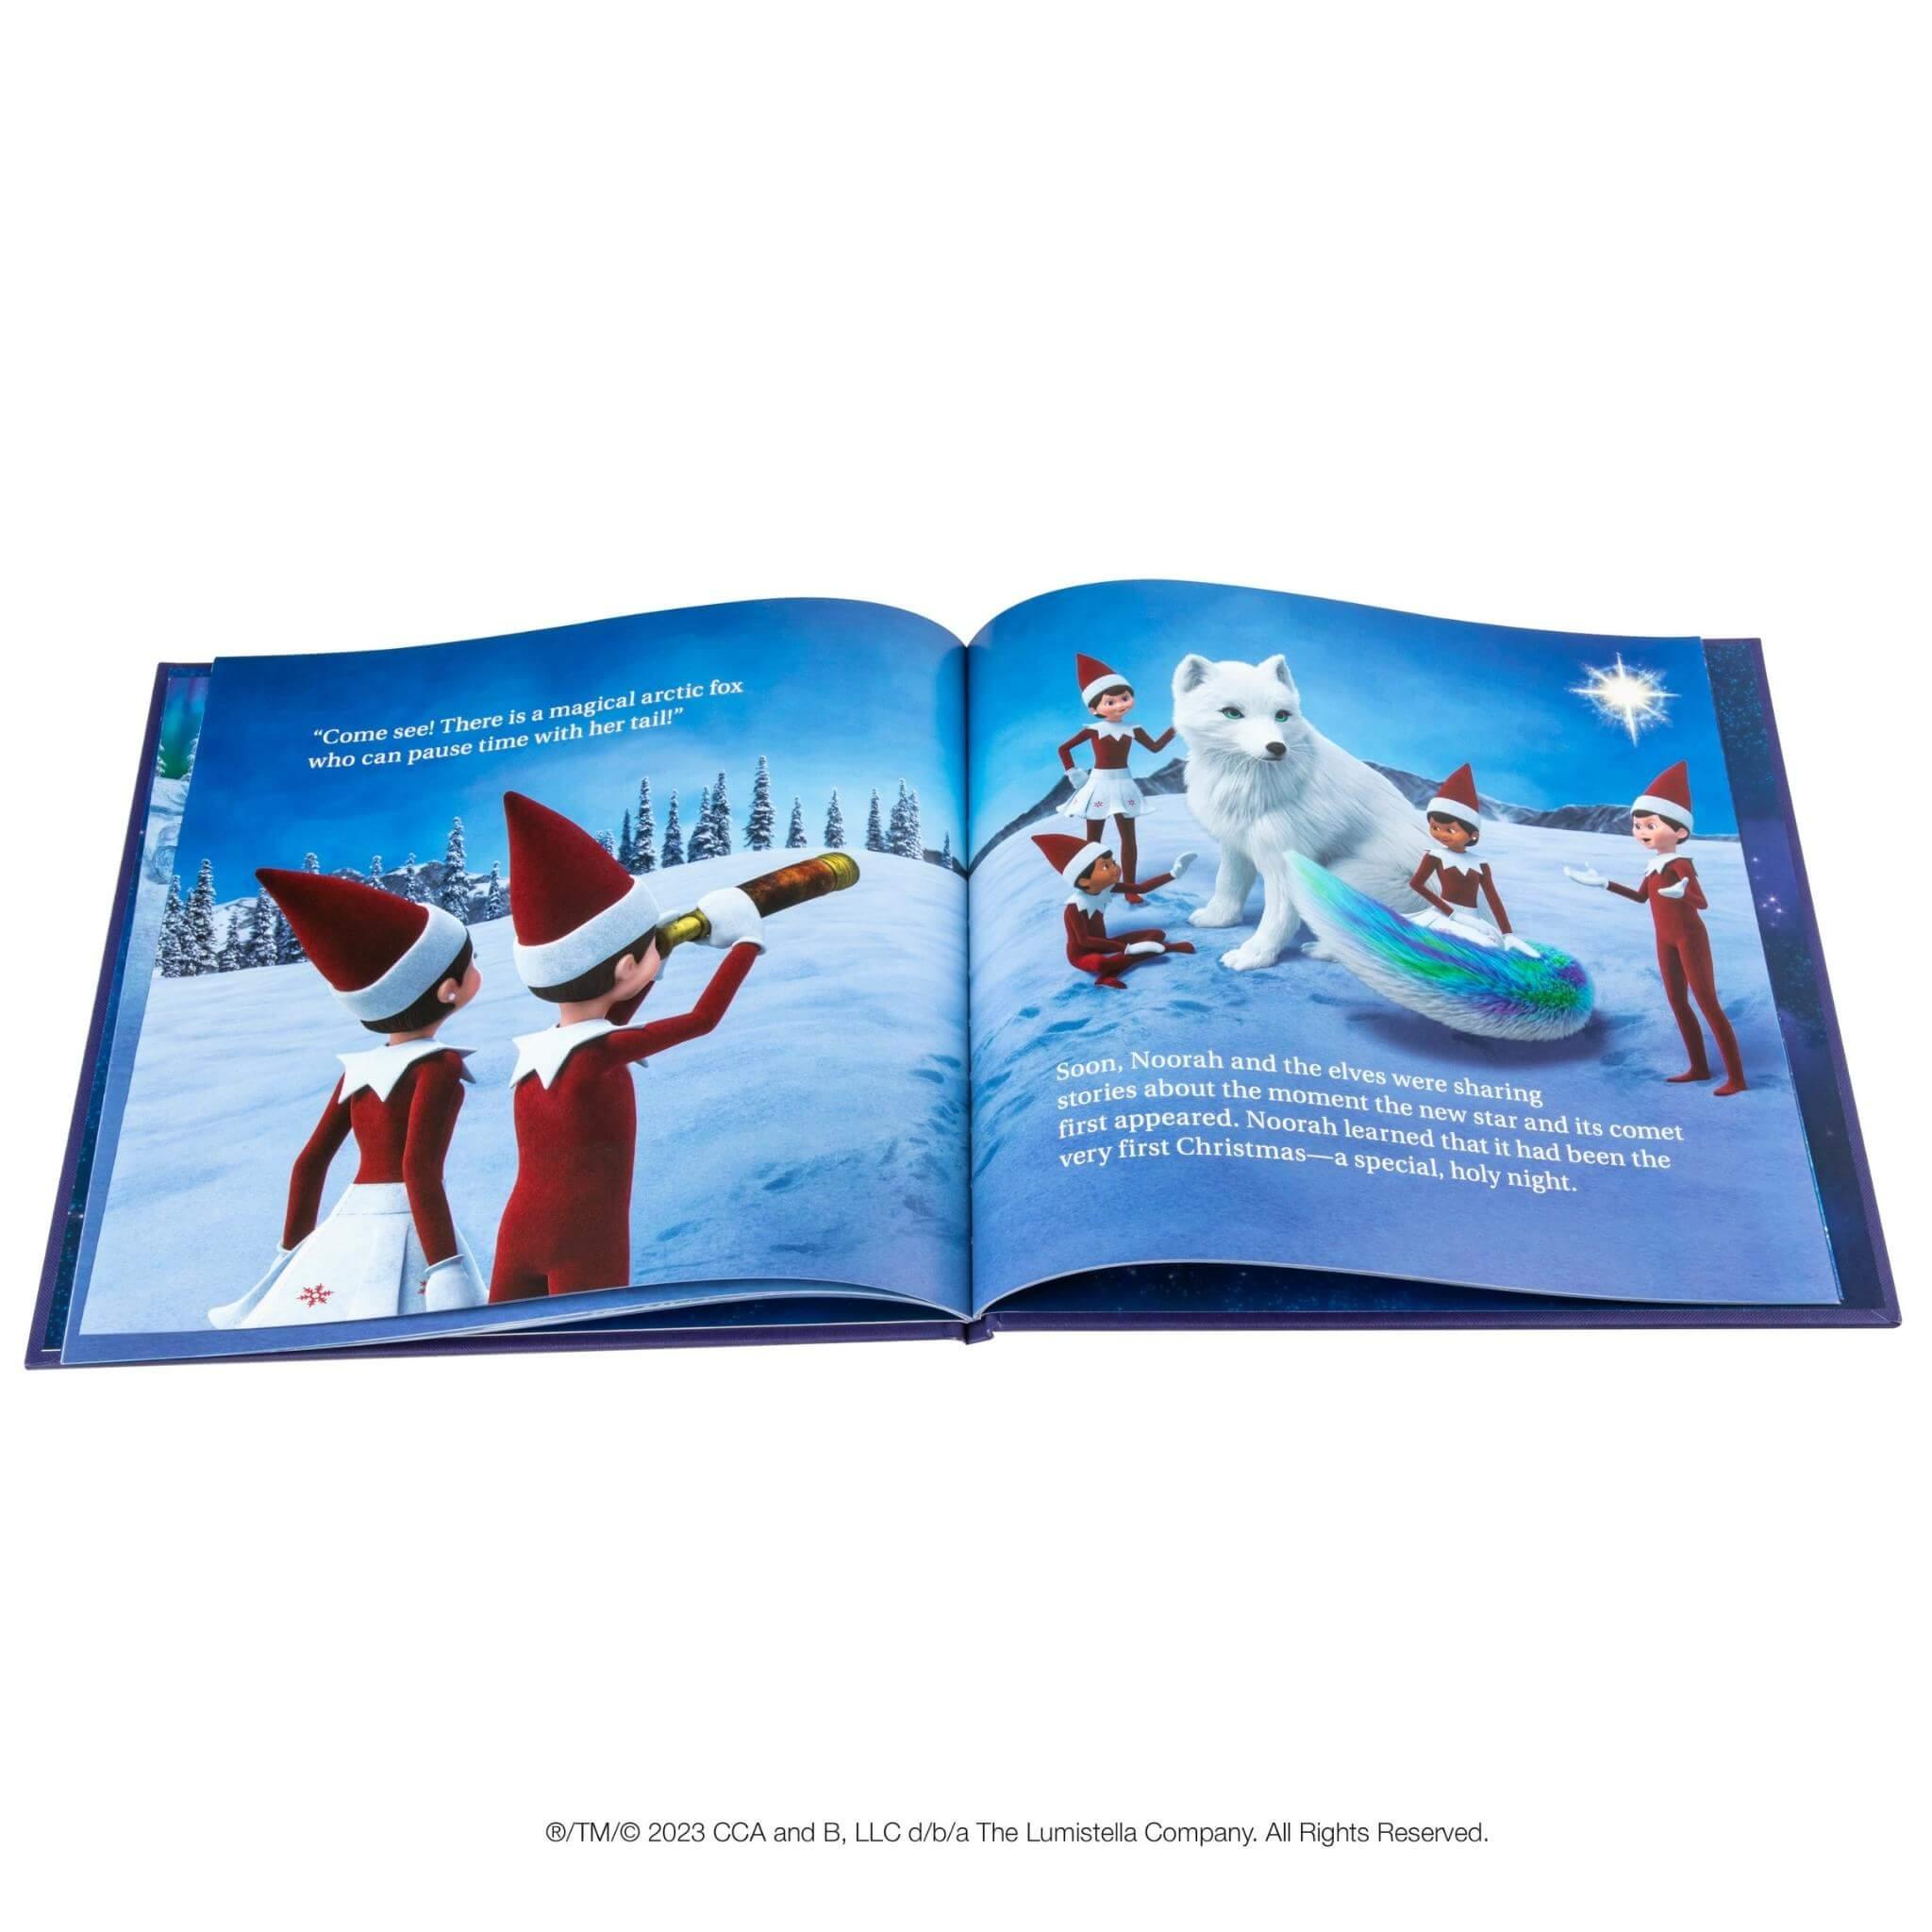 Extraordinary Noorah: Santa’s Magical Arctic Fox Book - The Elf on The Shelf